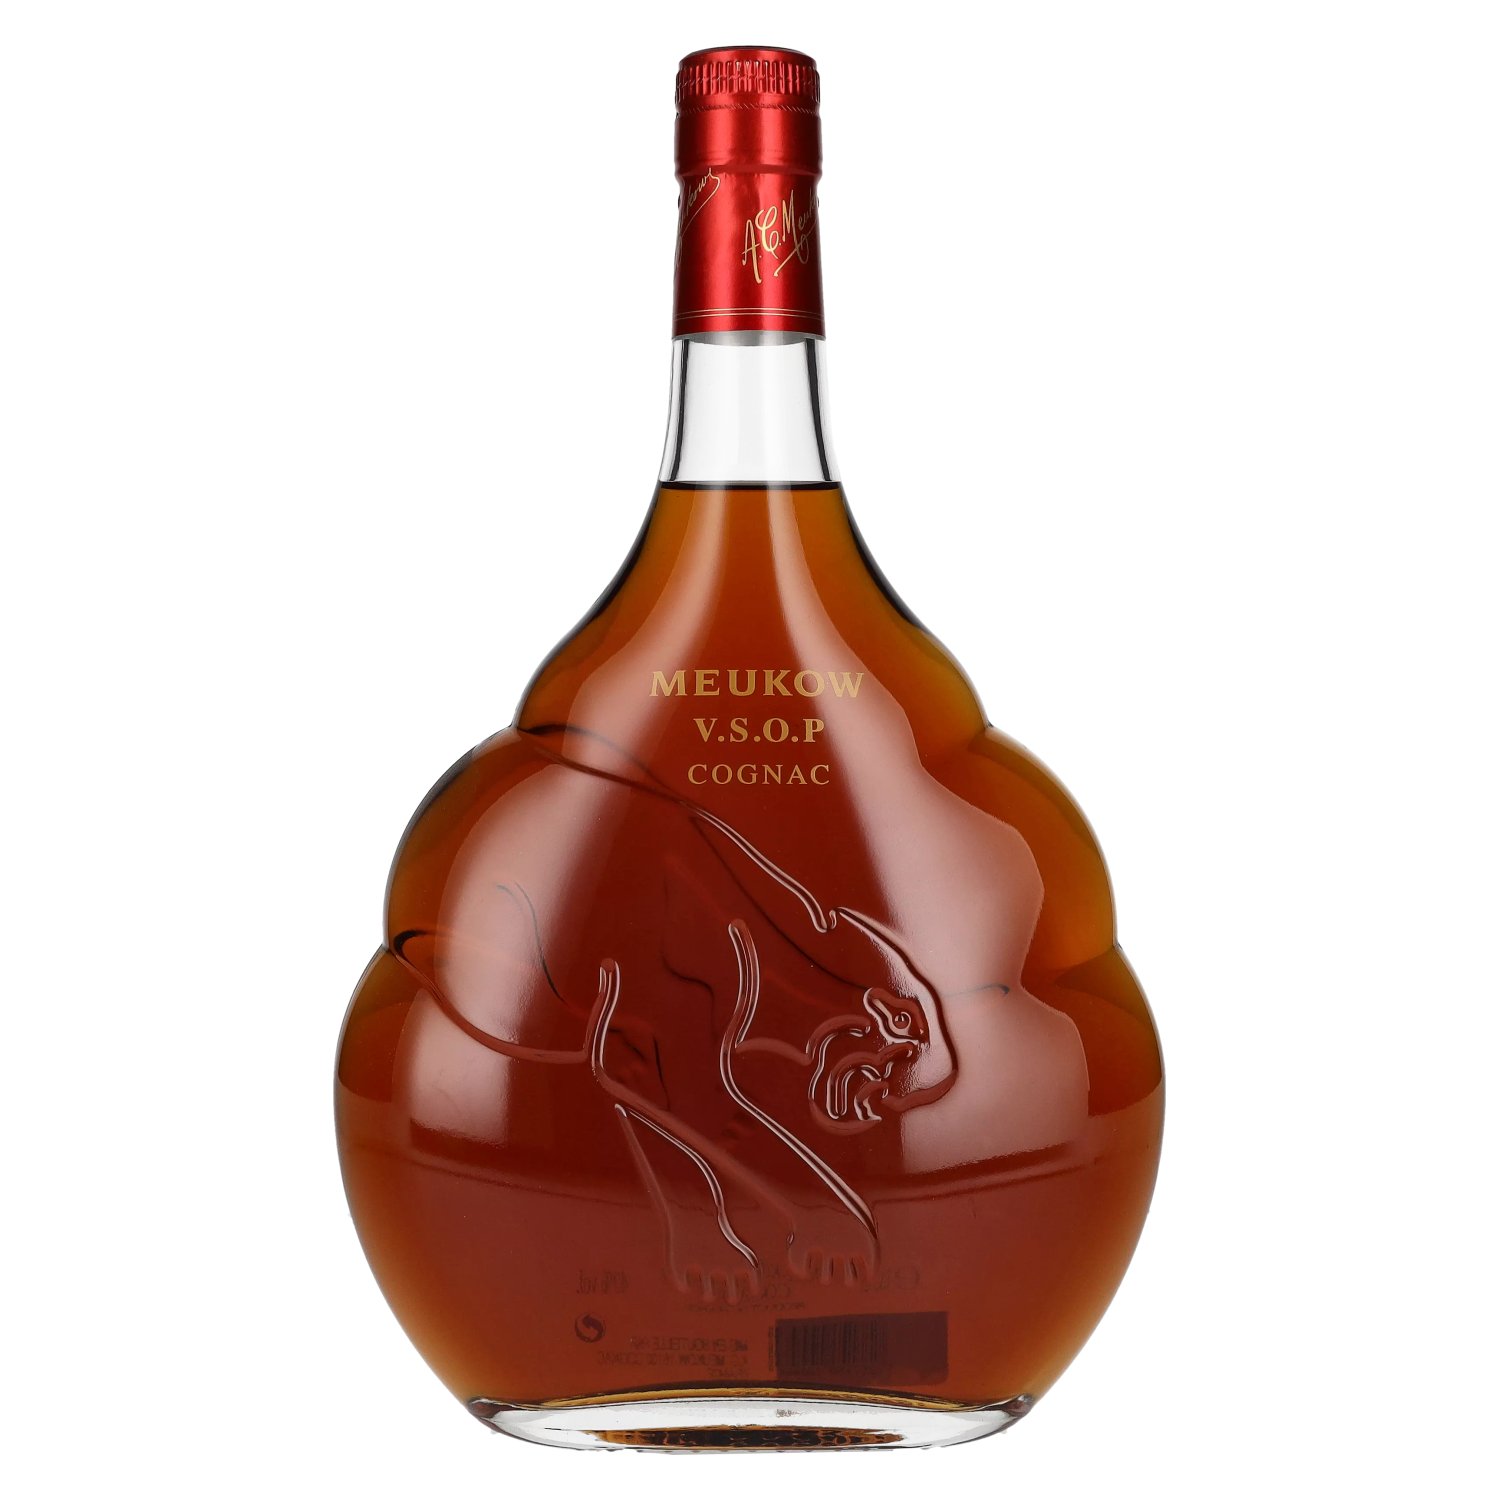 V.S.O.P 1l Cognac - Vol. delicando 40% Meukow